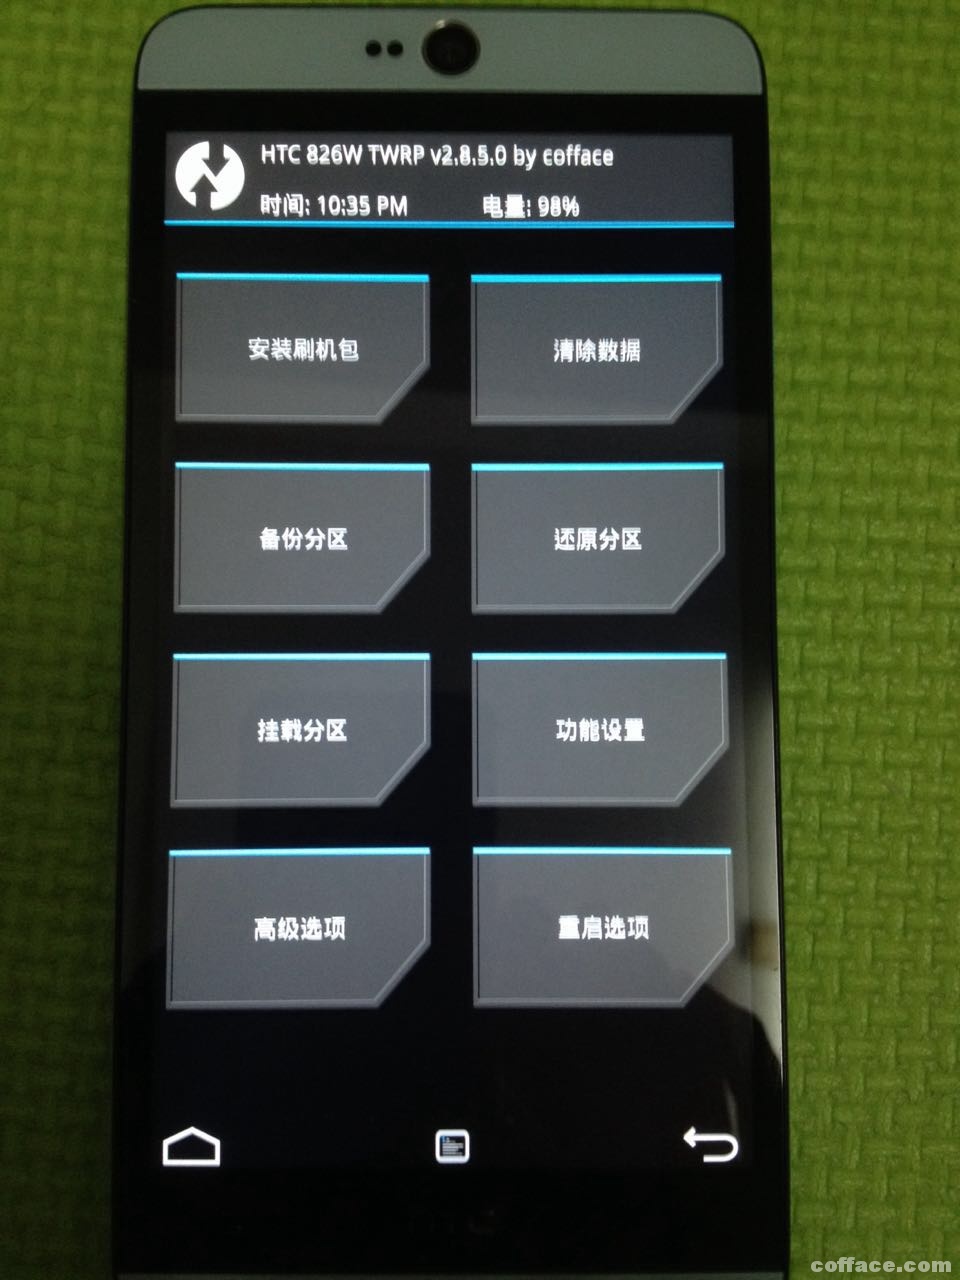 Twrp 3.3. TWRP HTC. HTC m9 TWRP. TWRP фото. TWRP-3.7.0.